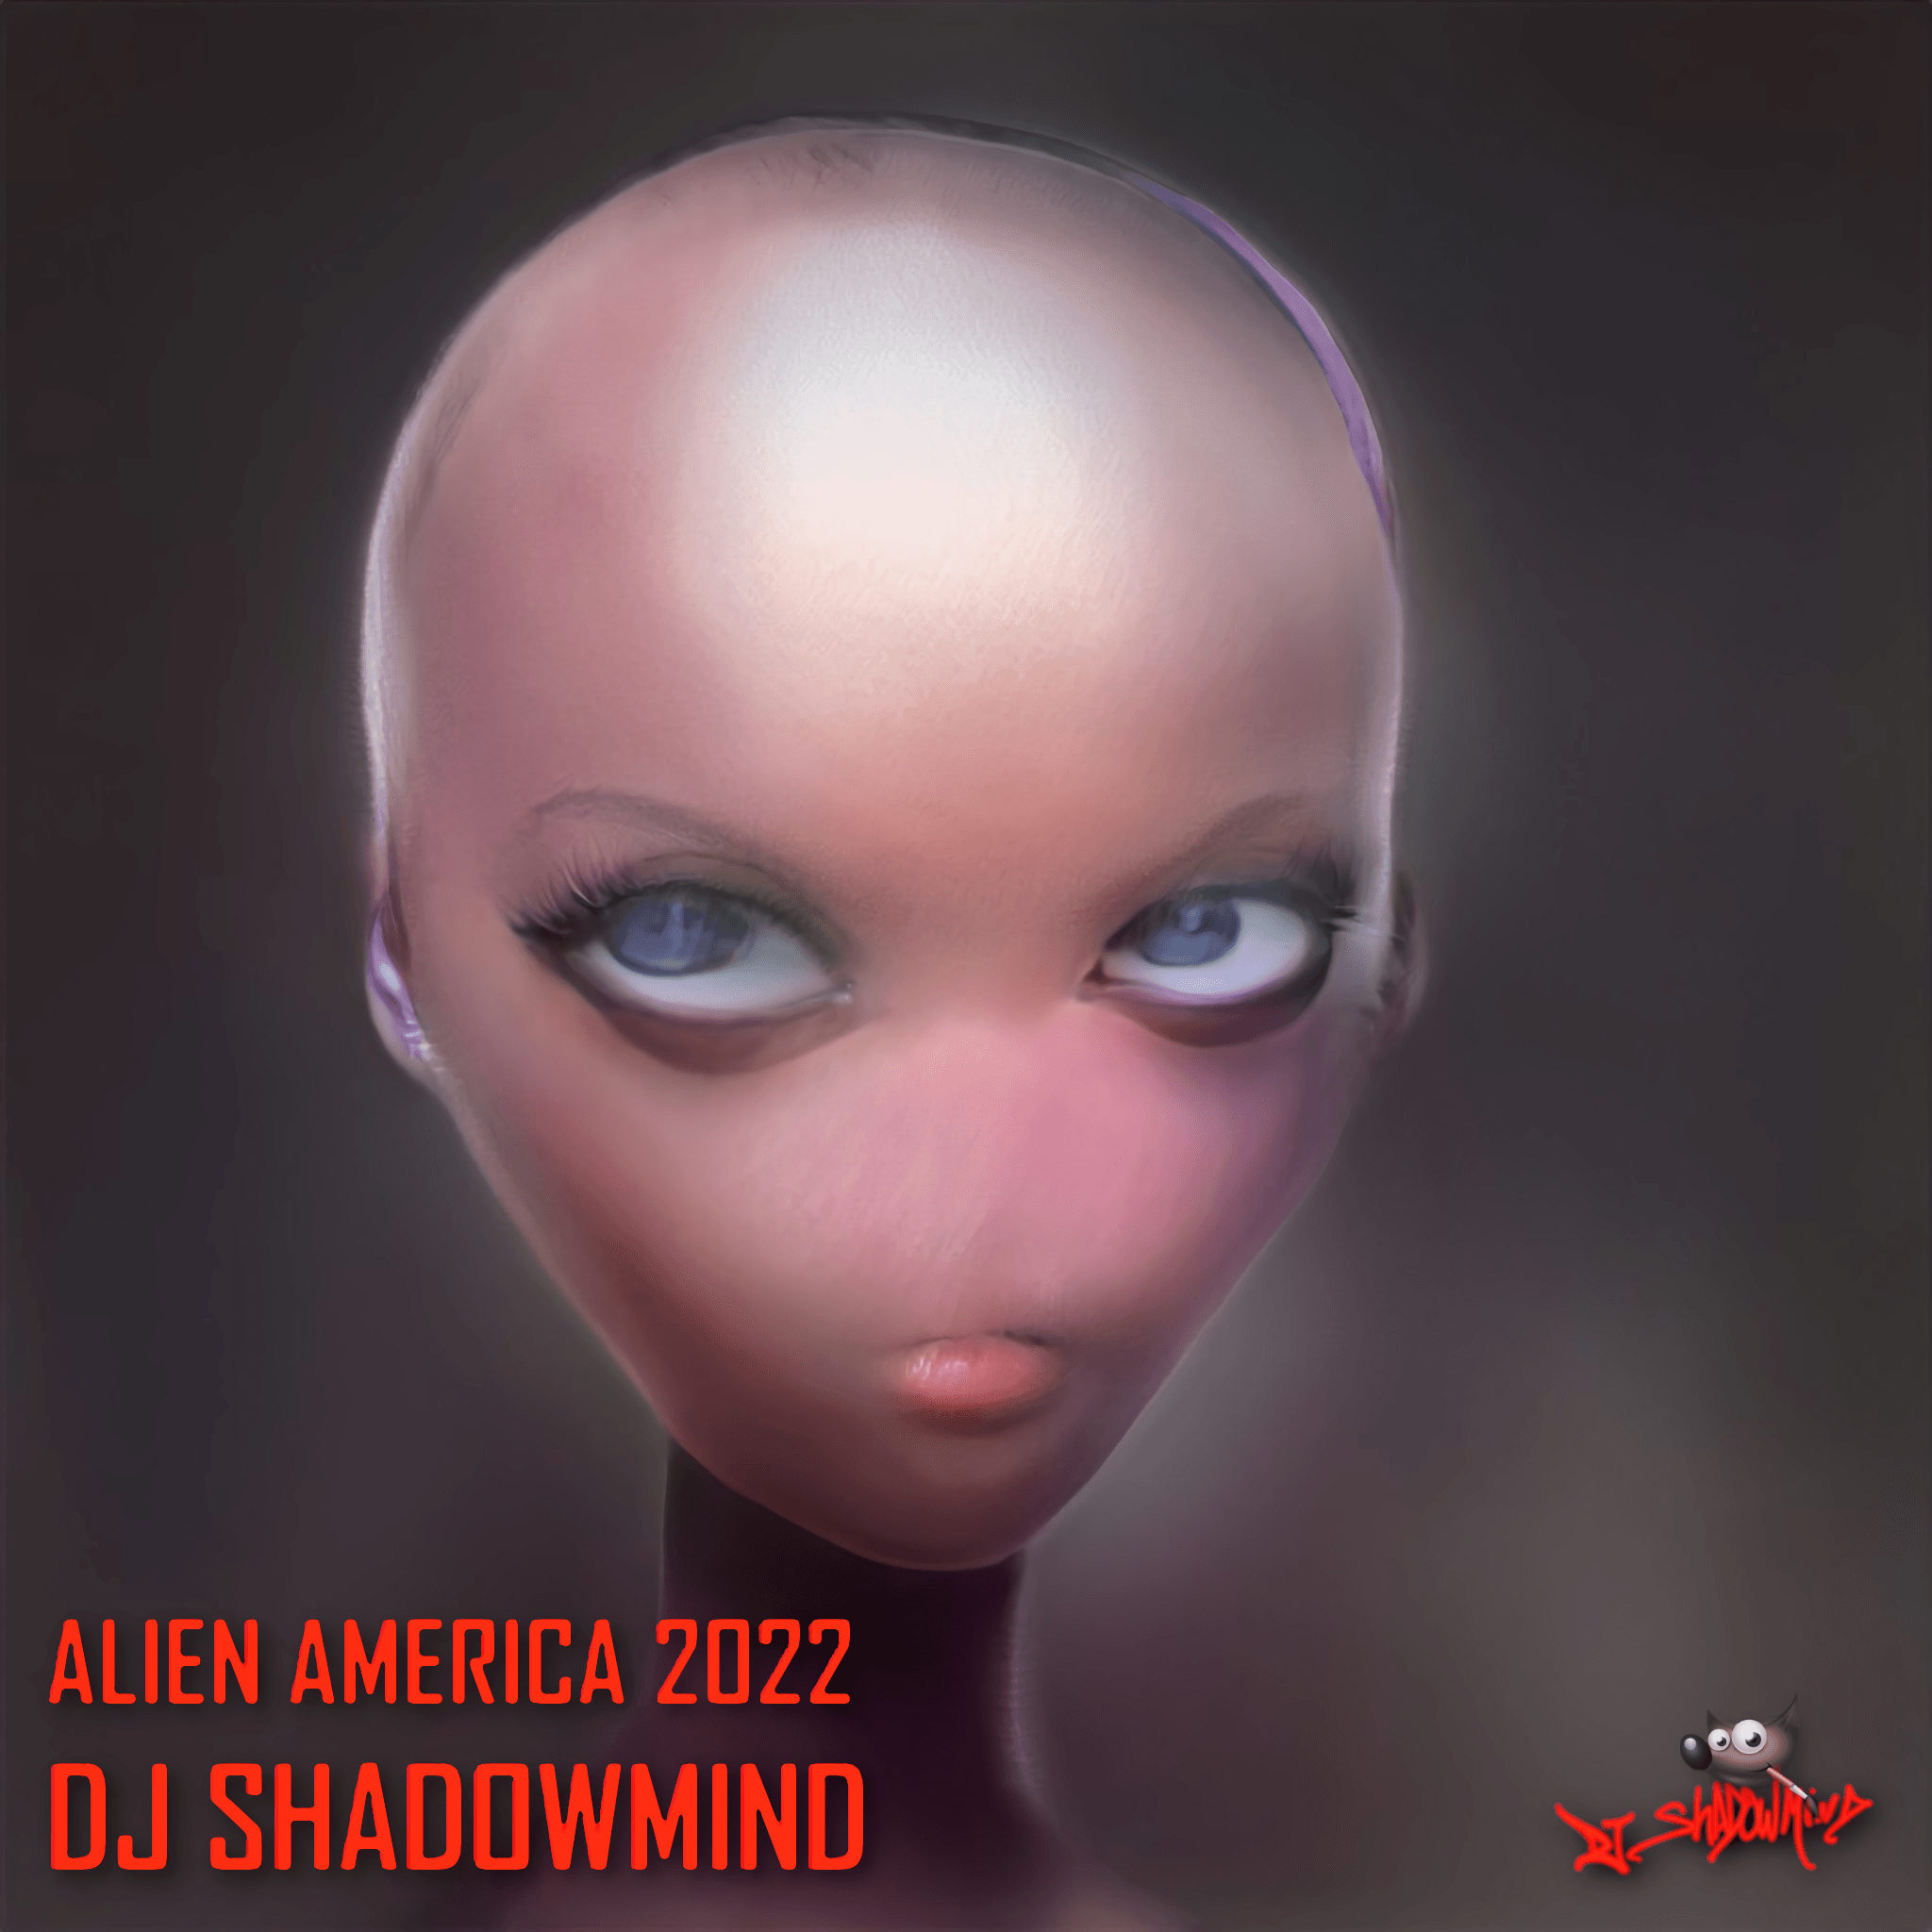 Alien America 2022 - Agent 033